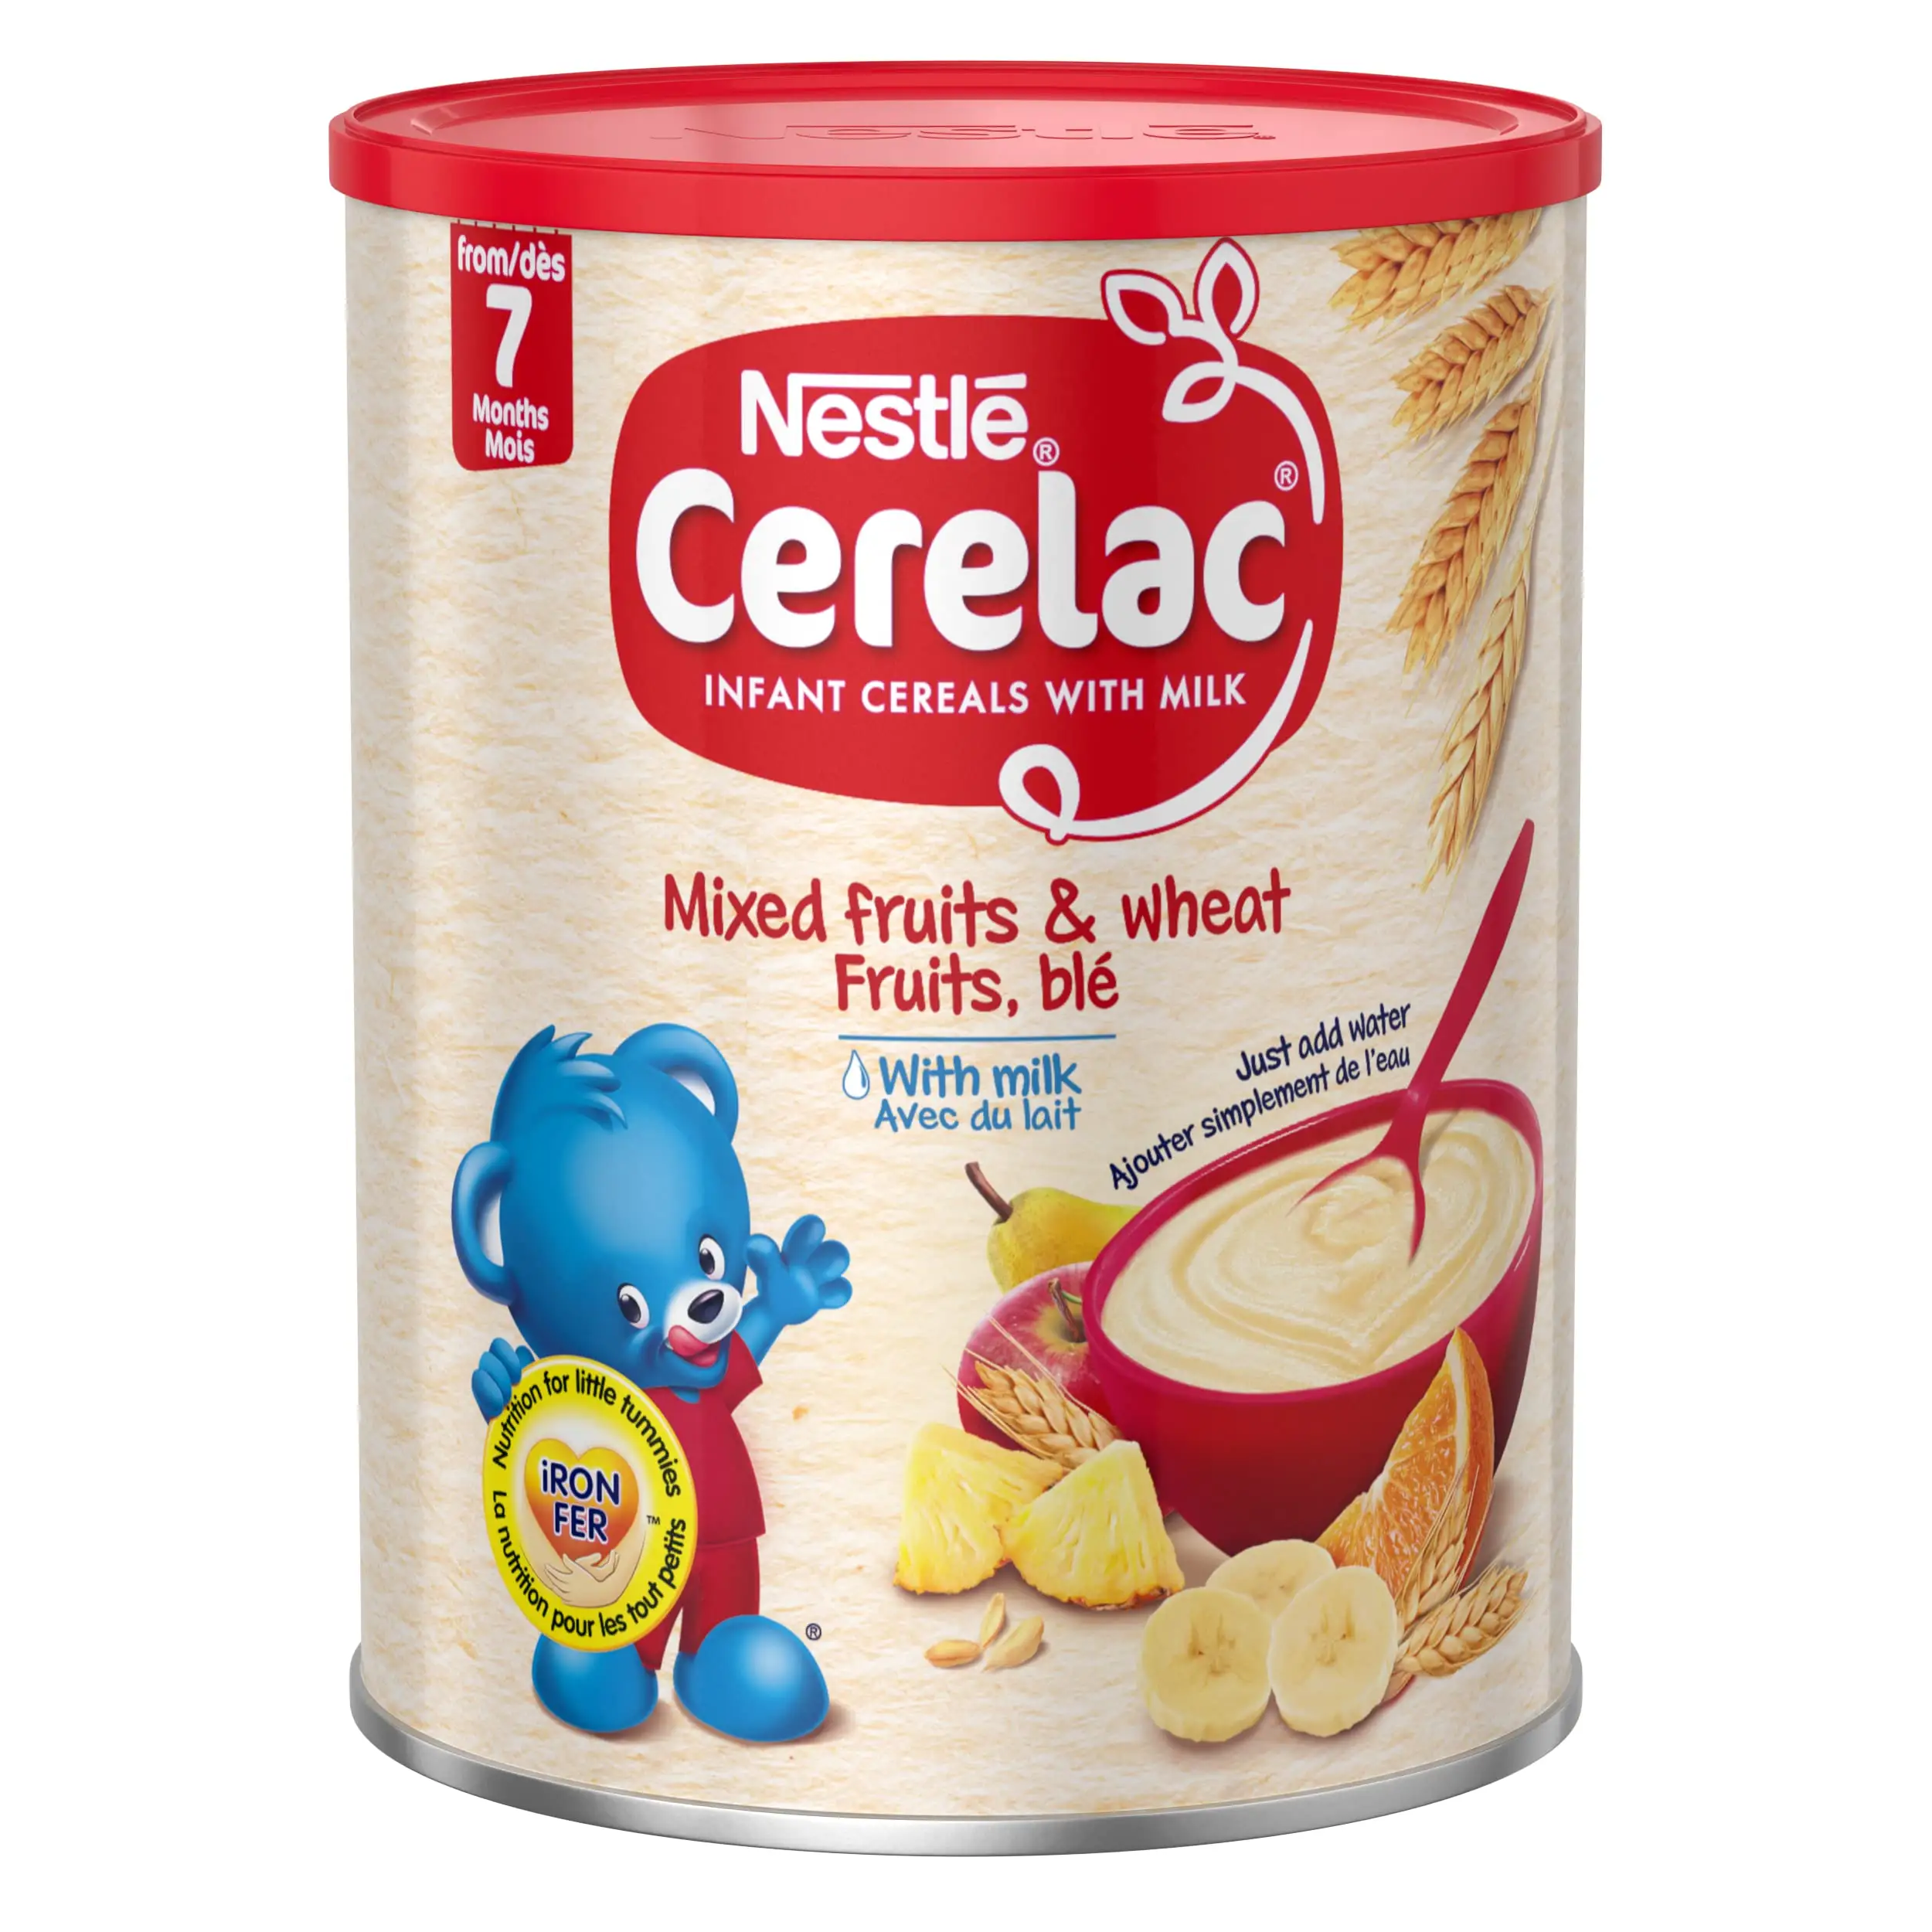 Nestle Cerelac Madu & Gandum Bayi Beras Buah Campuran Sereal Bayi dengan Susu